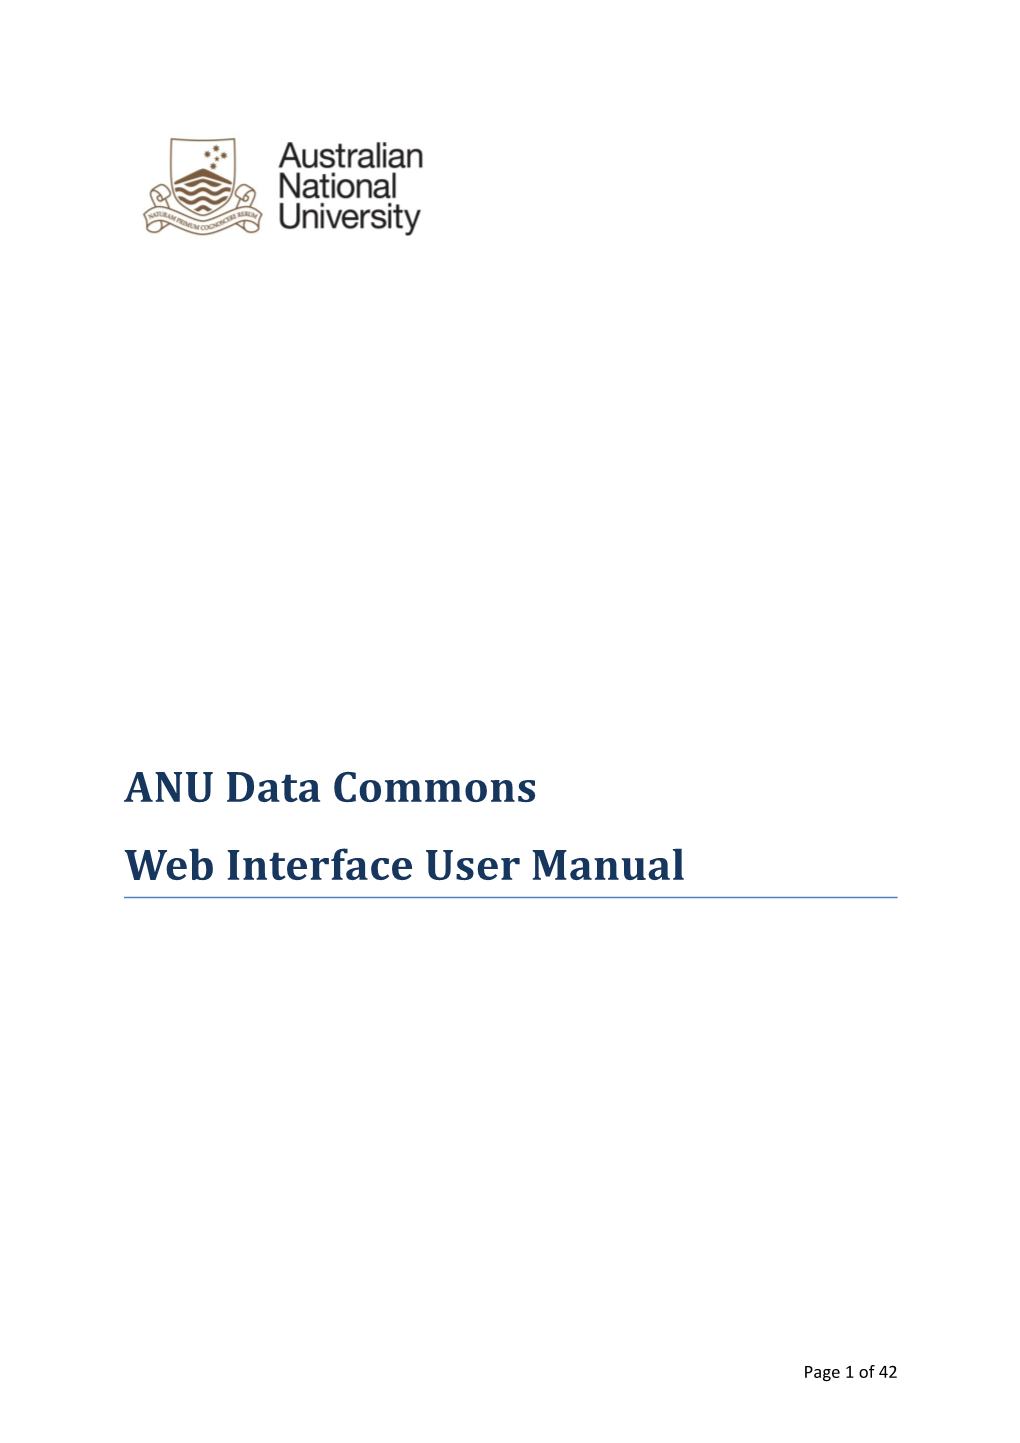 Web Interface User Manual